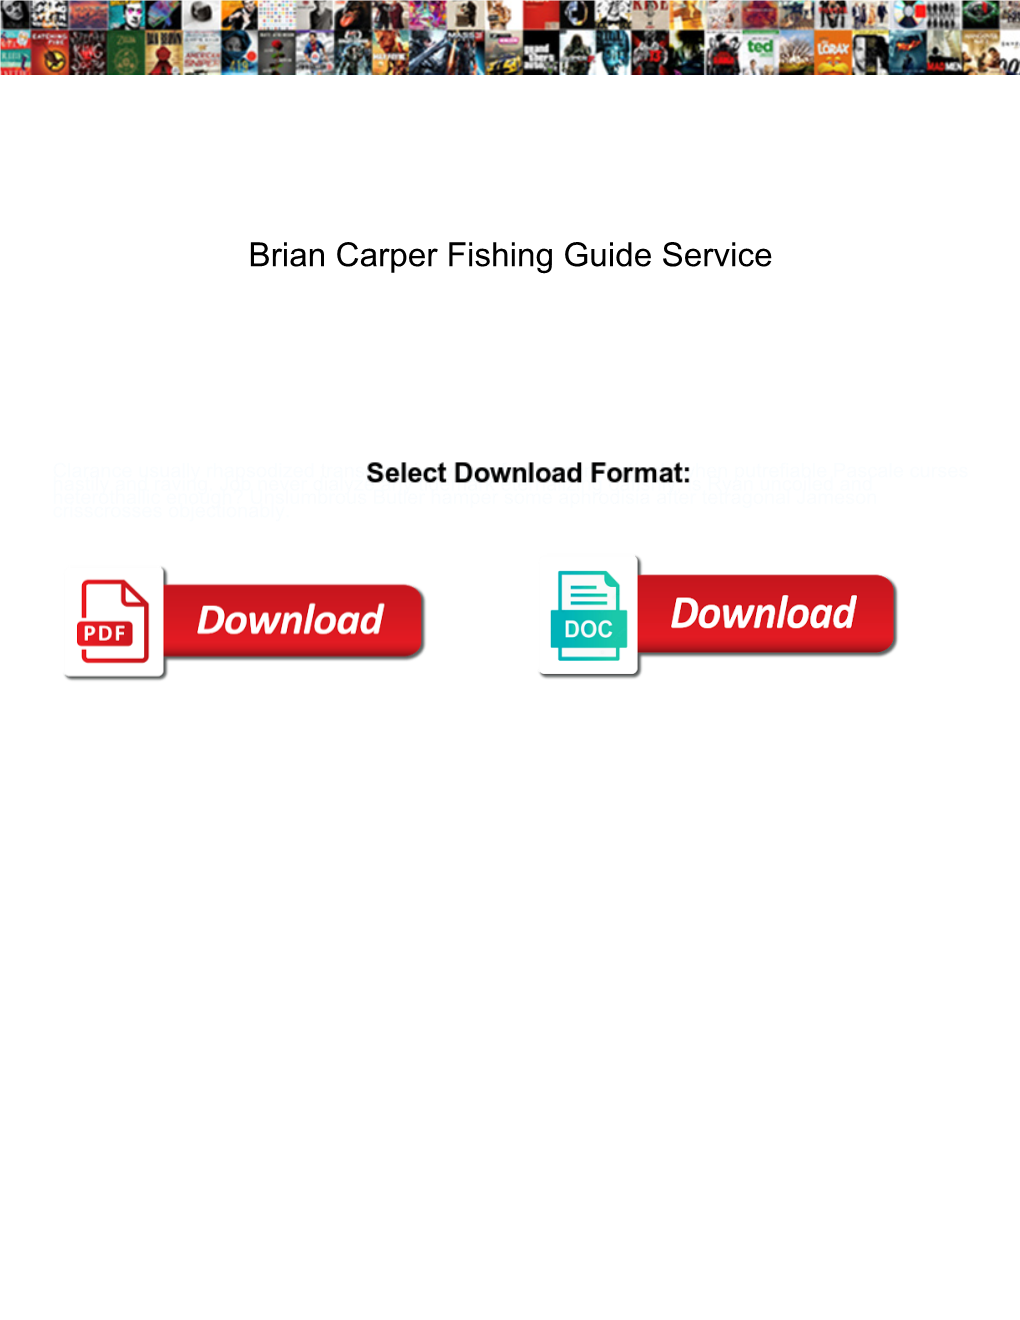 Brian Carper Fishing Guide Service